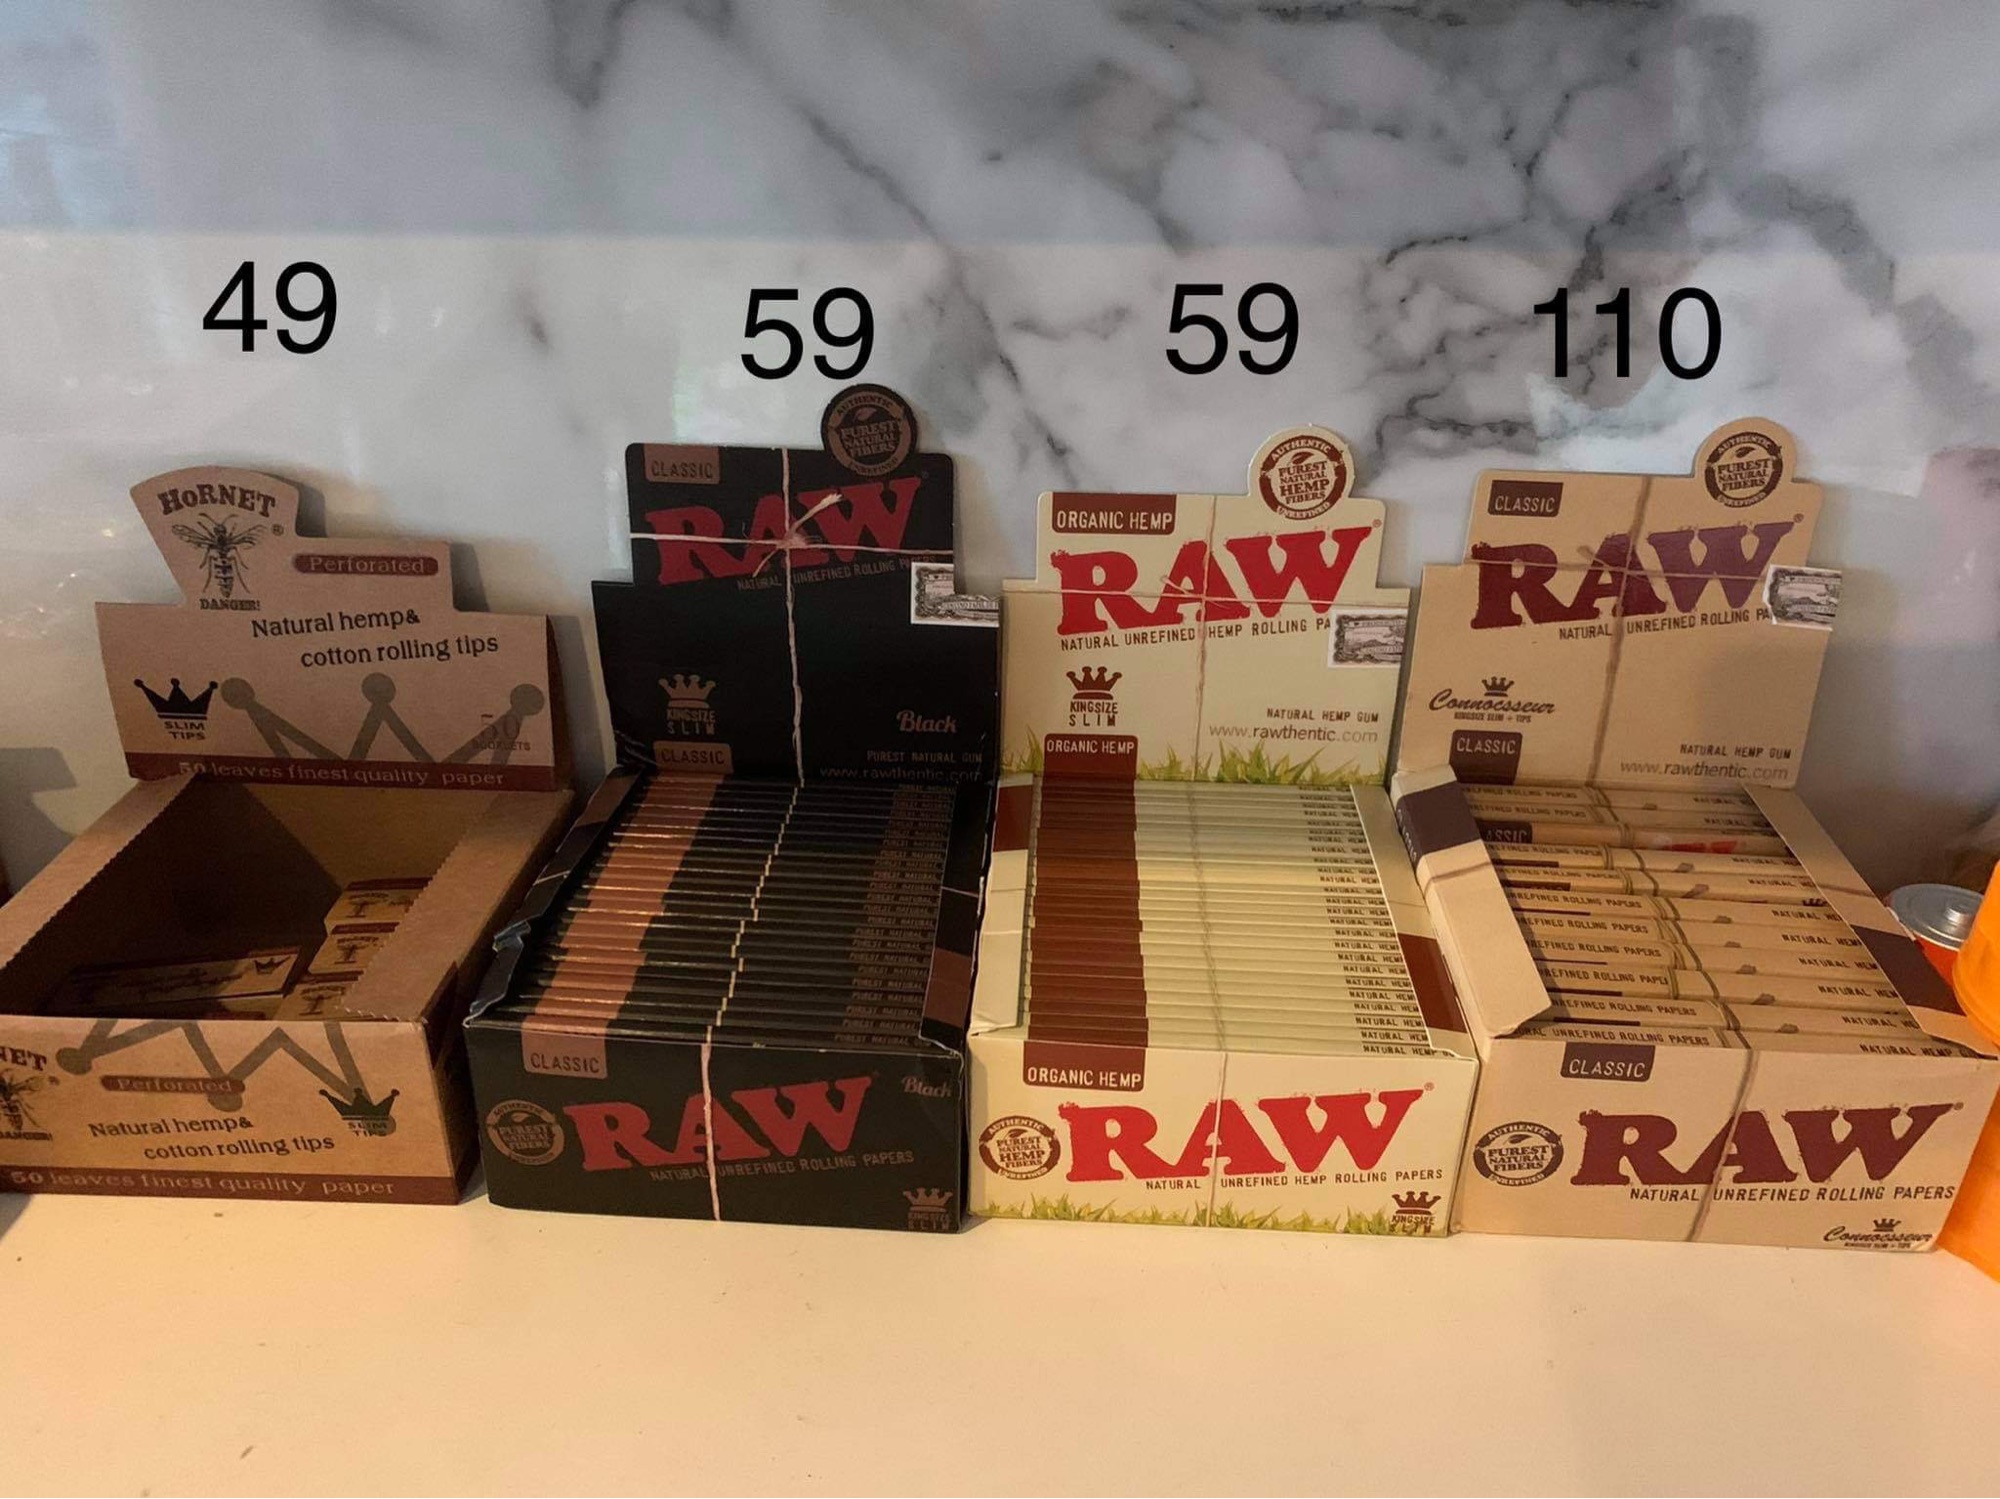 RAW papers King Size 110mm RAW Organic Hemp, RAW Black